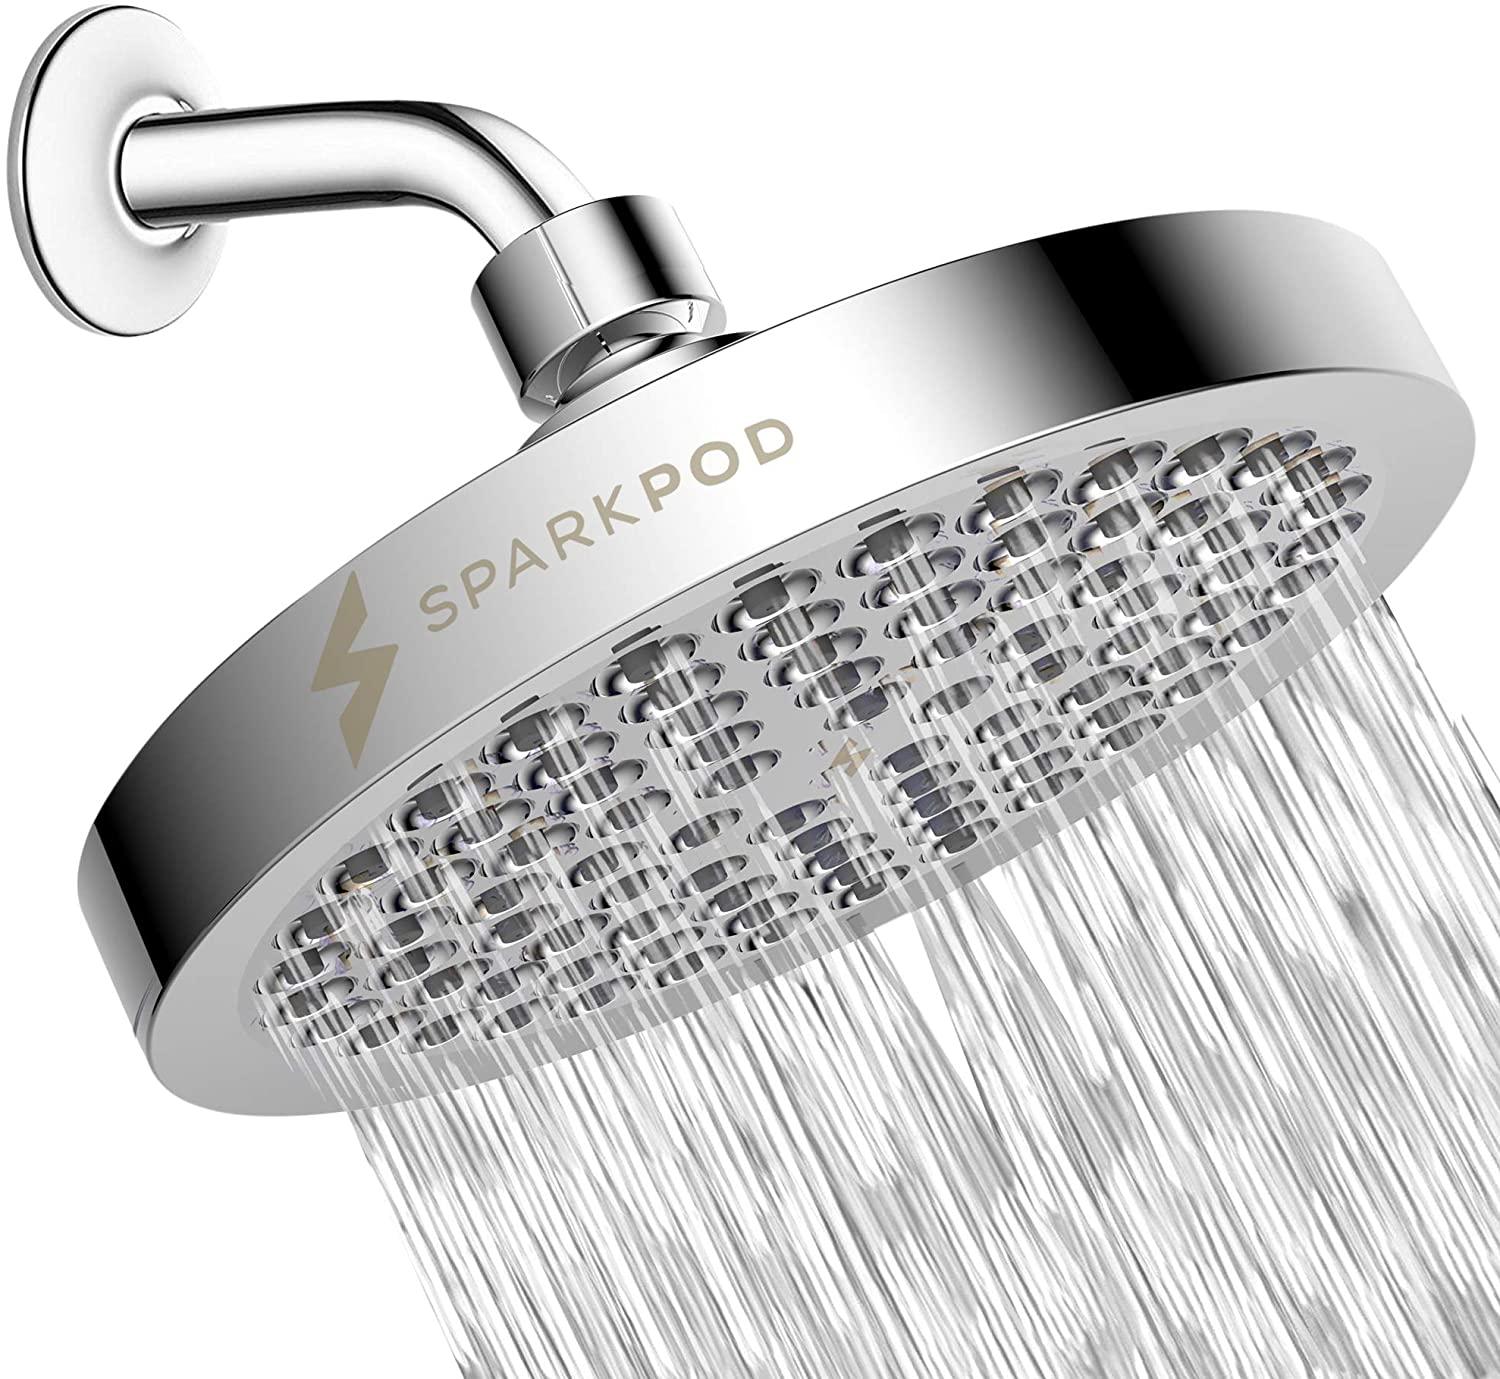 SparkPod High Pressure Rain Showerhead for $23.98